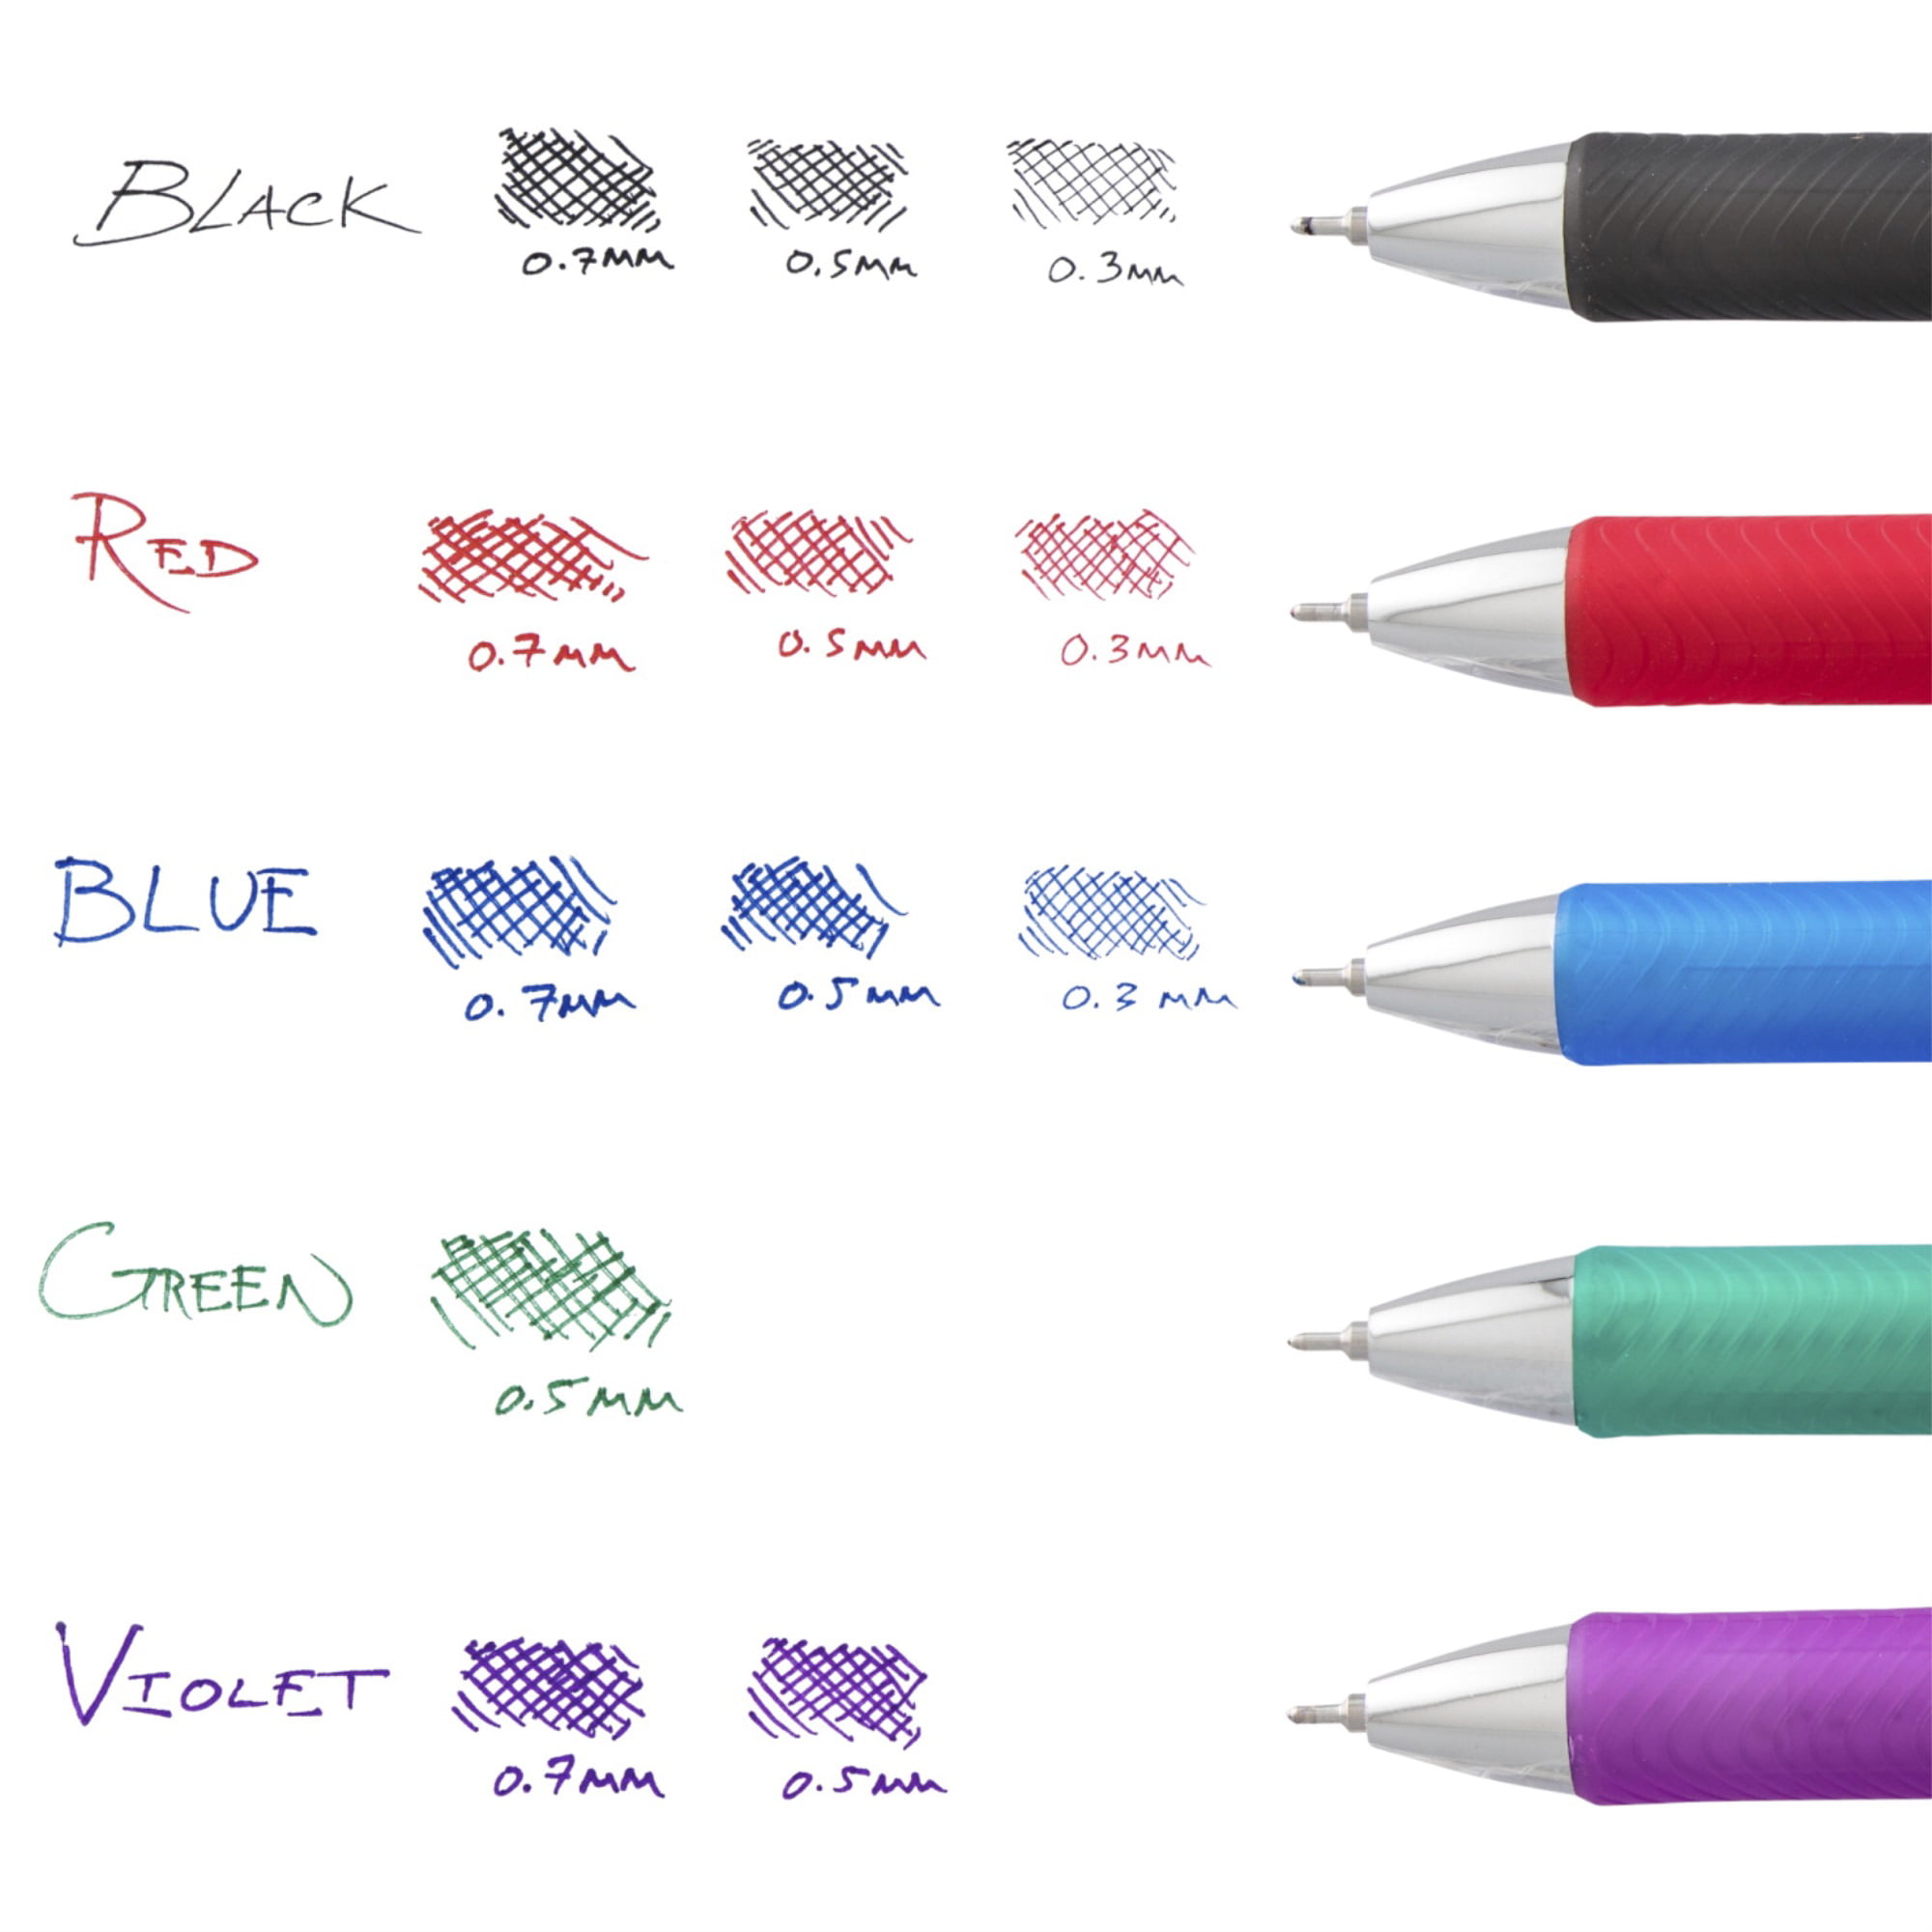 Pentel EnerGel RTX Retractable Liquid Gel Pen, 0.3 mm Needle Tip, Red Ink,  Pack of 2 